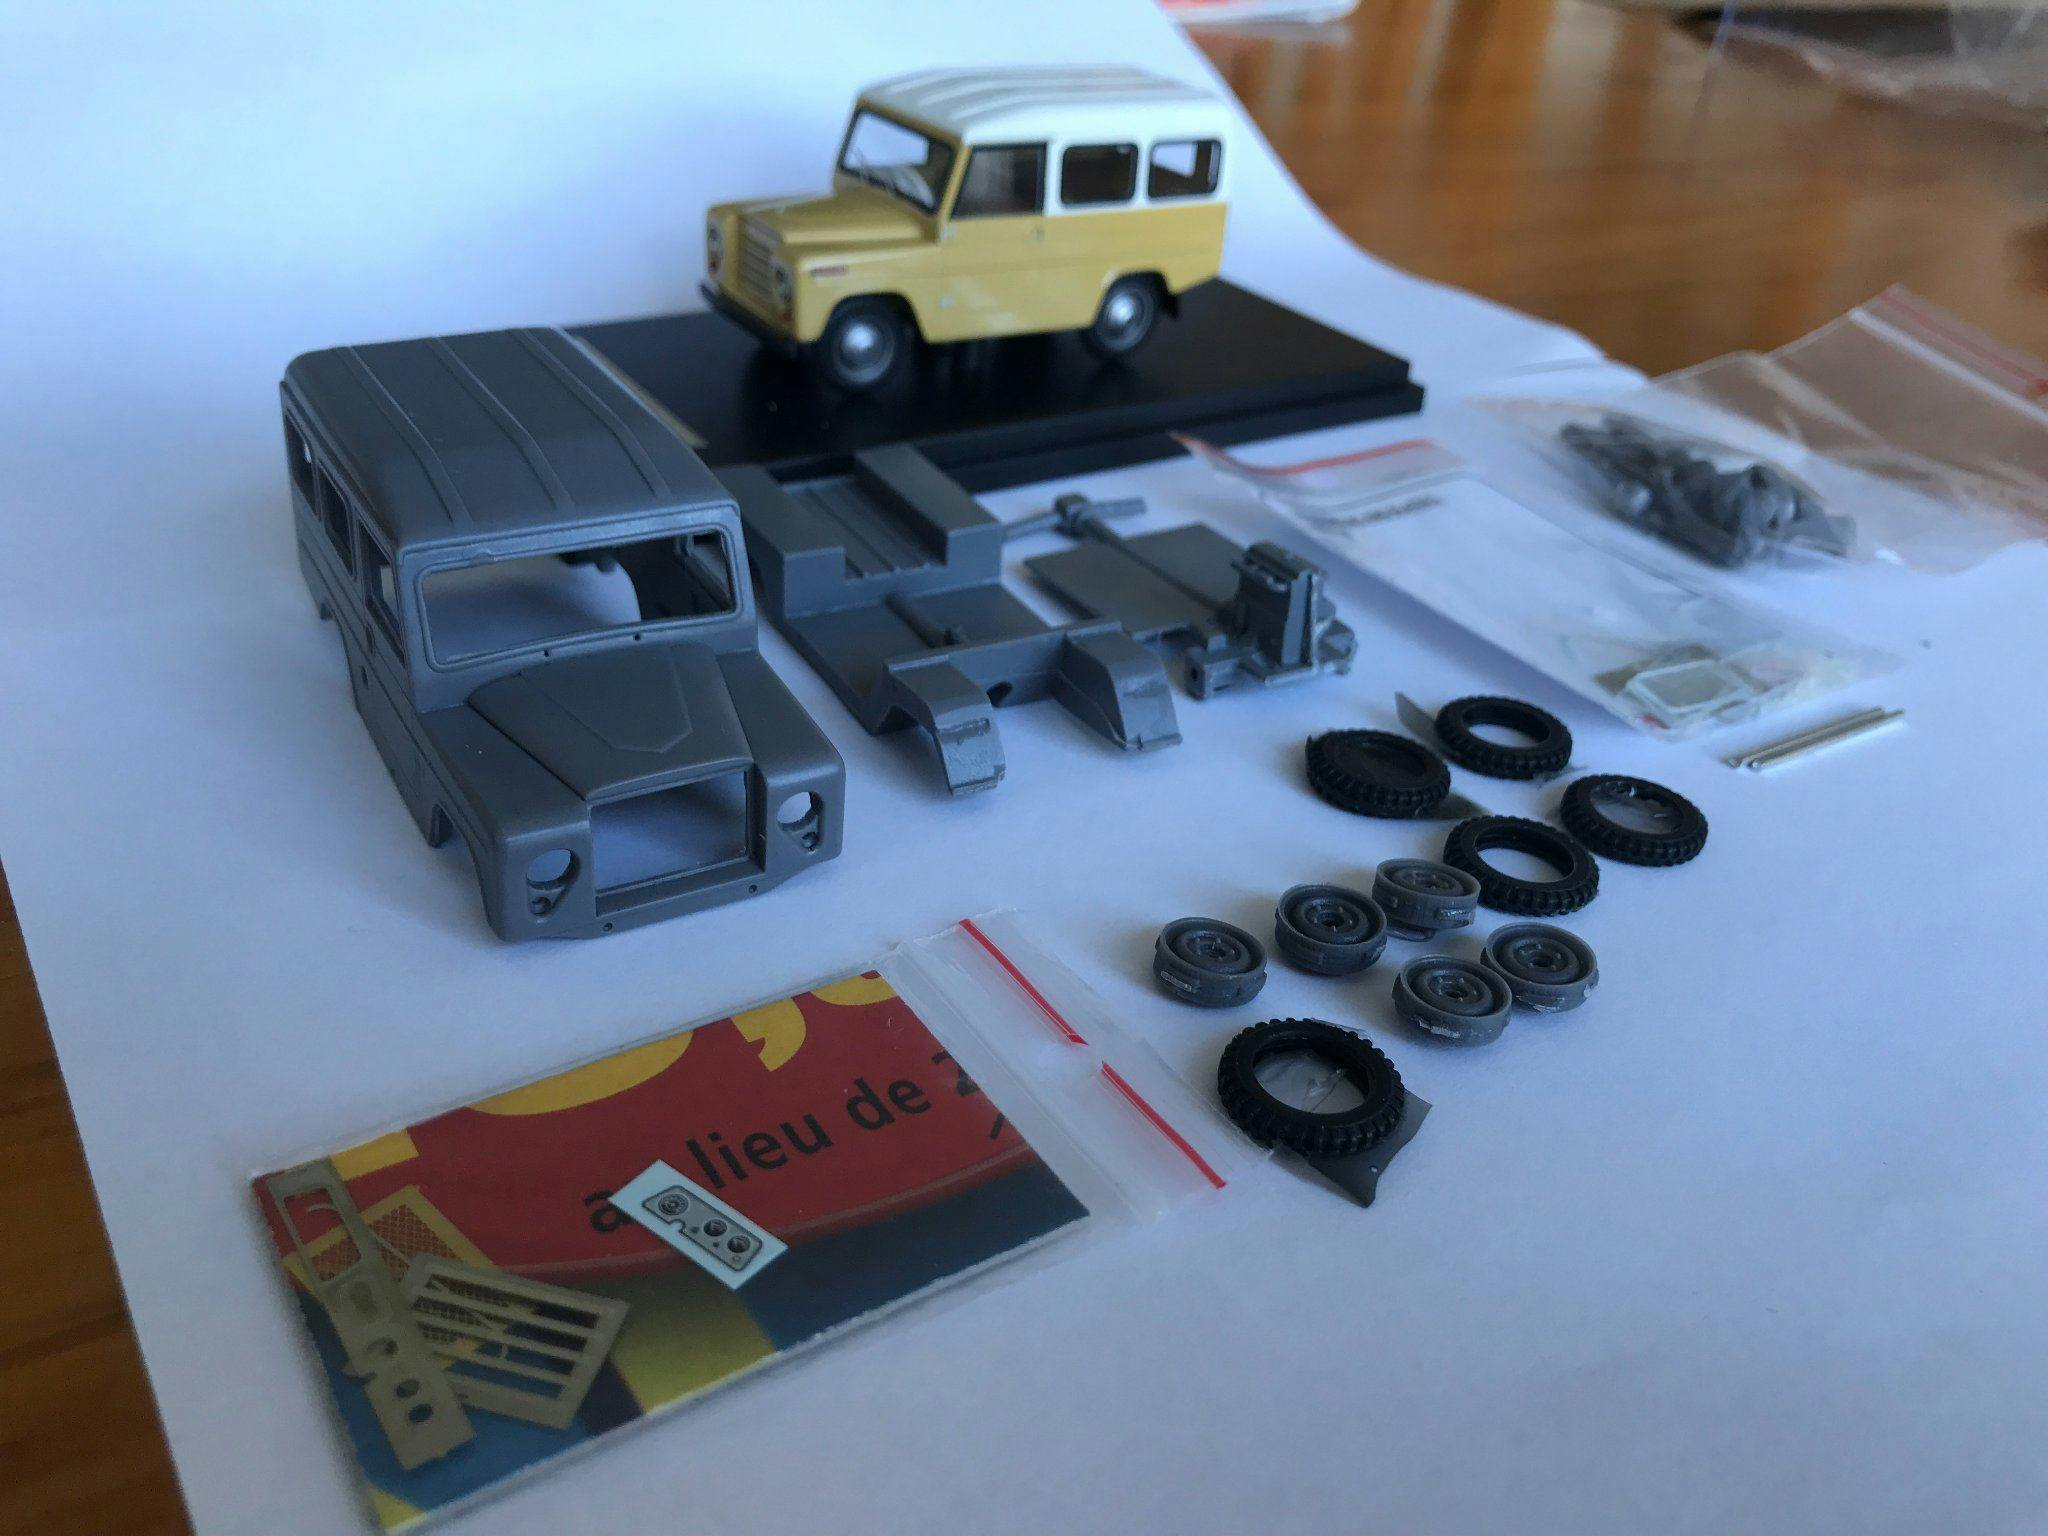 Display of various parts for a Trekka model kit